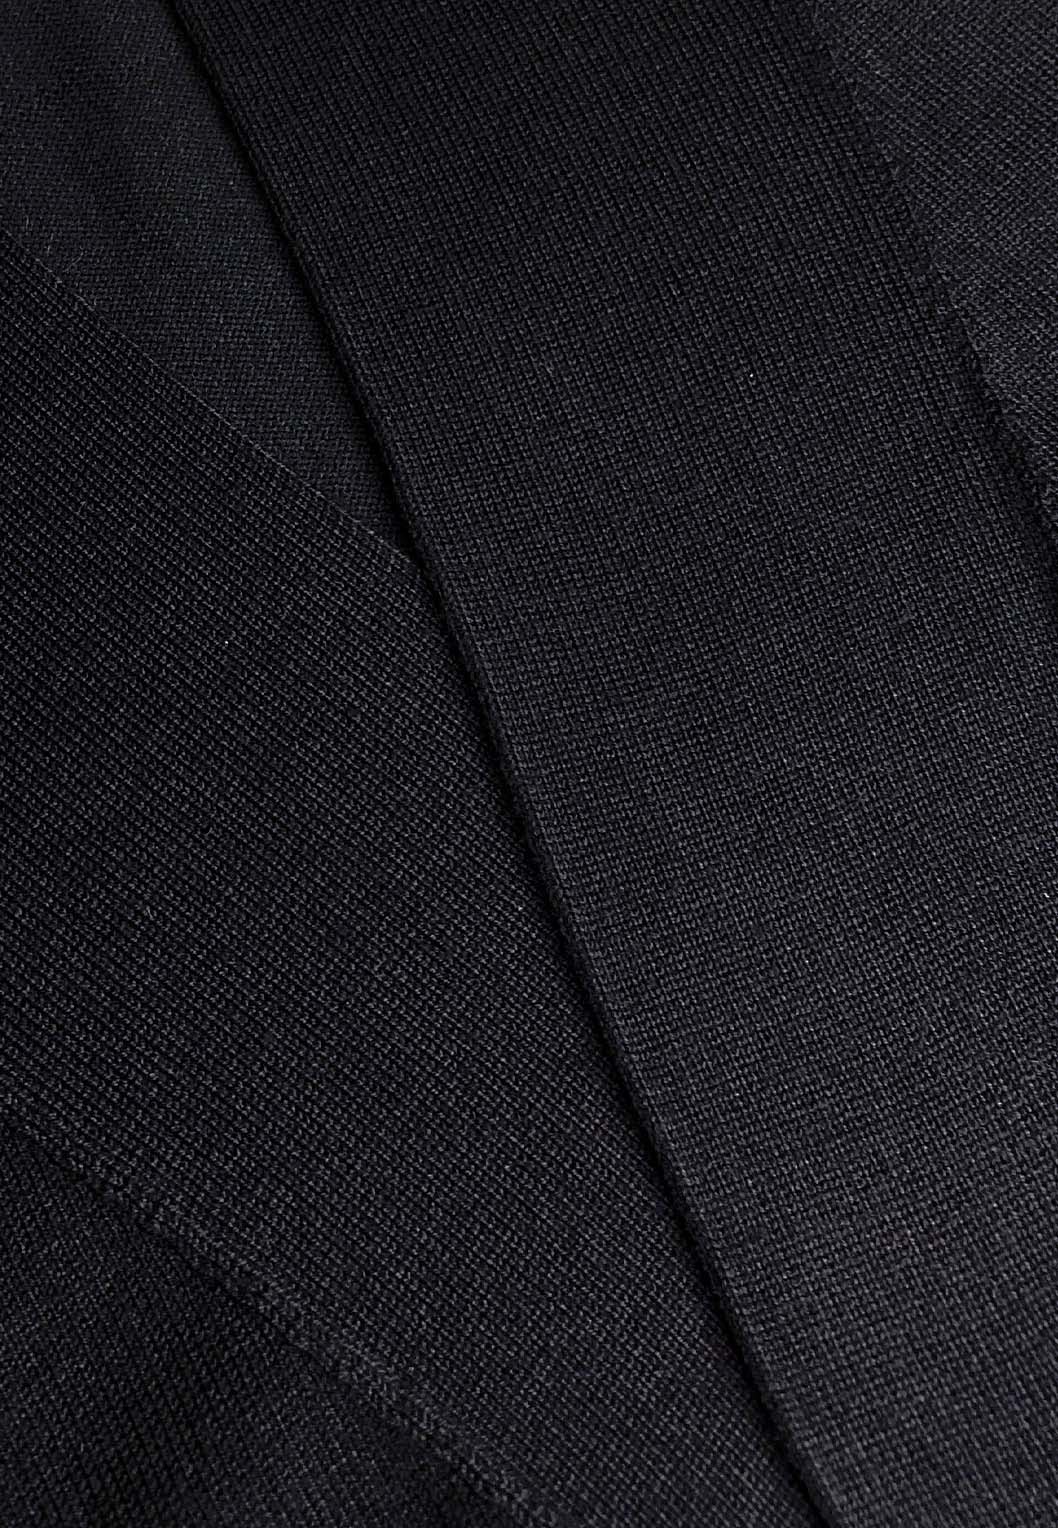 Long Cardigan Long Sleeve Open Front Knit Cardigan  - Black